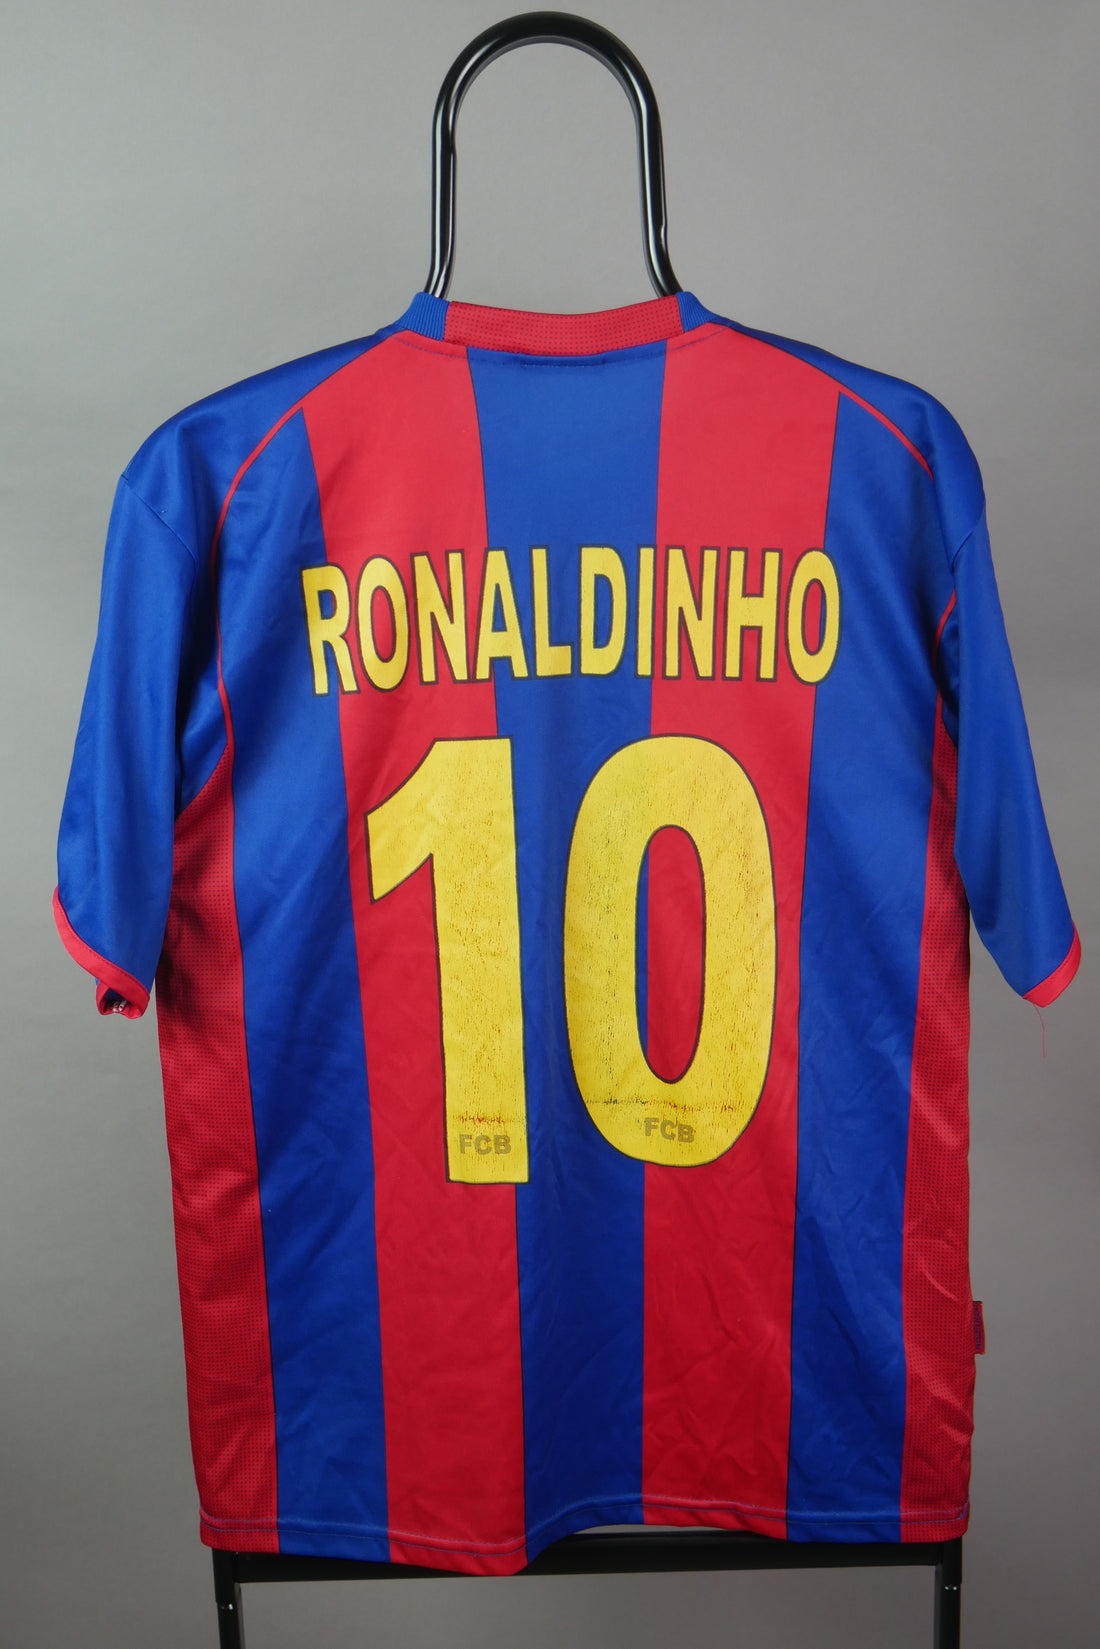 The FC Barcelona Football Shirt (M)